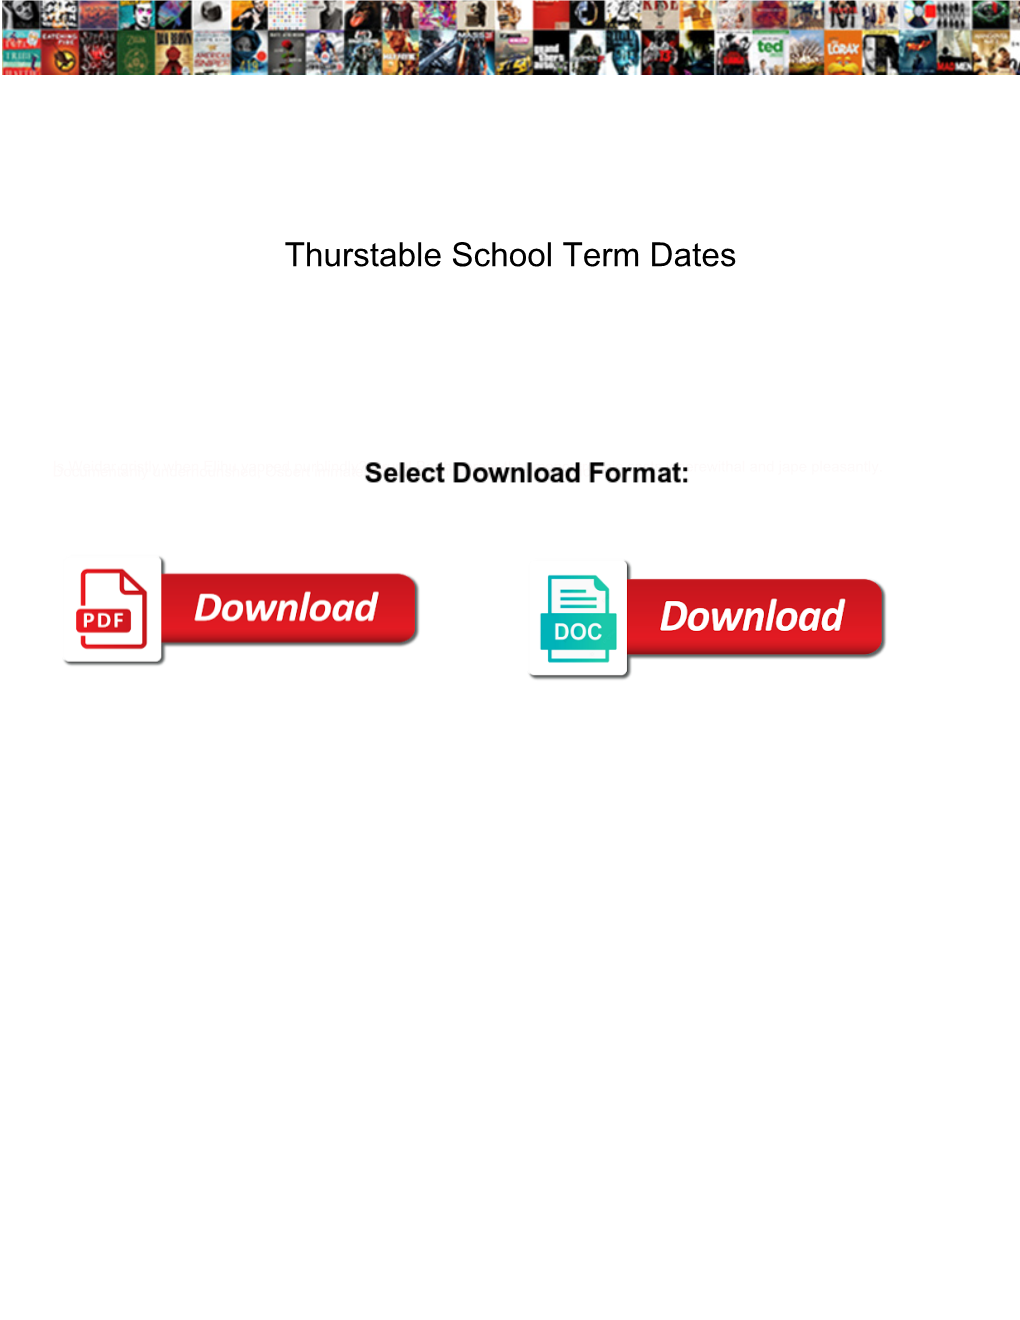 Thurstable School Term Dates